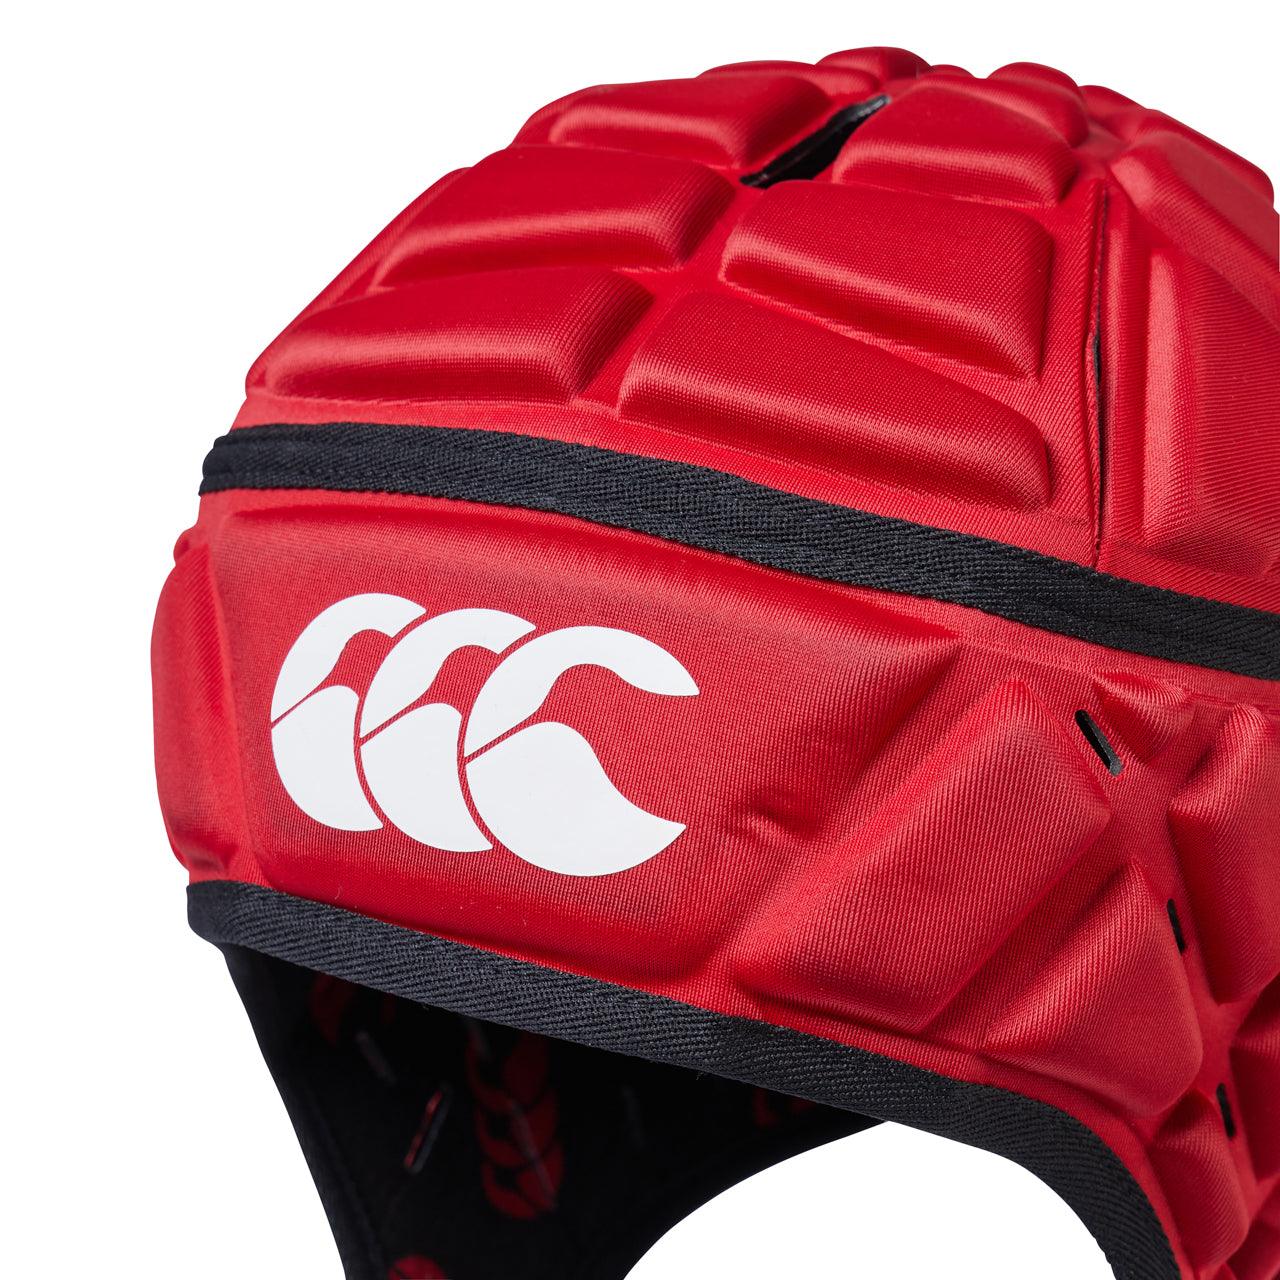 CCC Raze Headguard - red